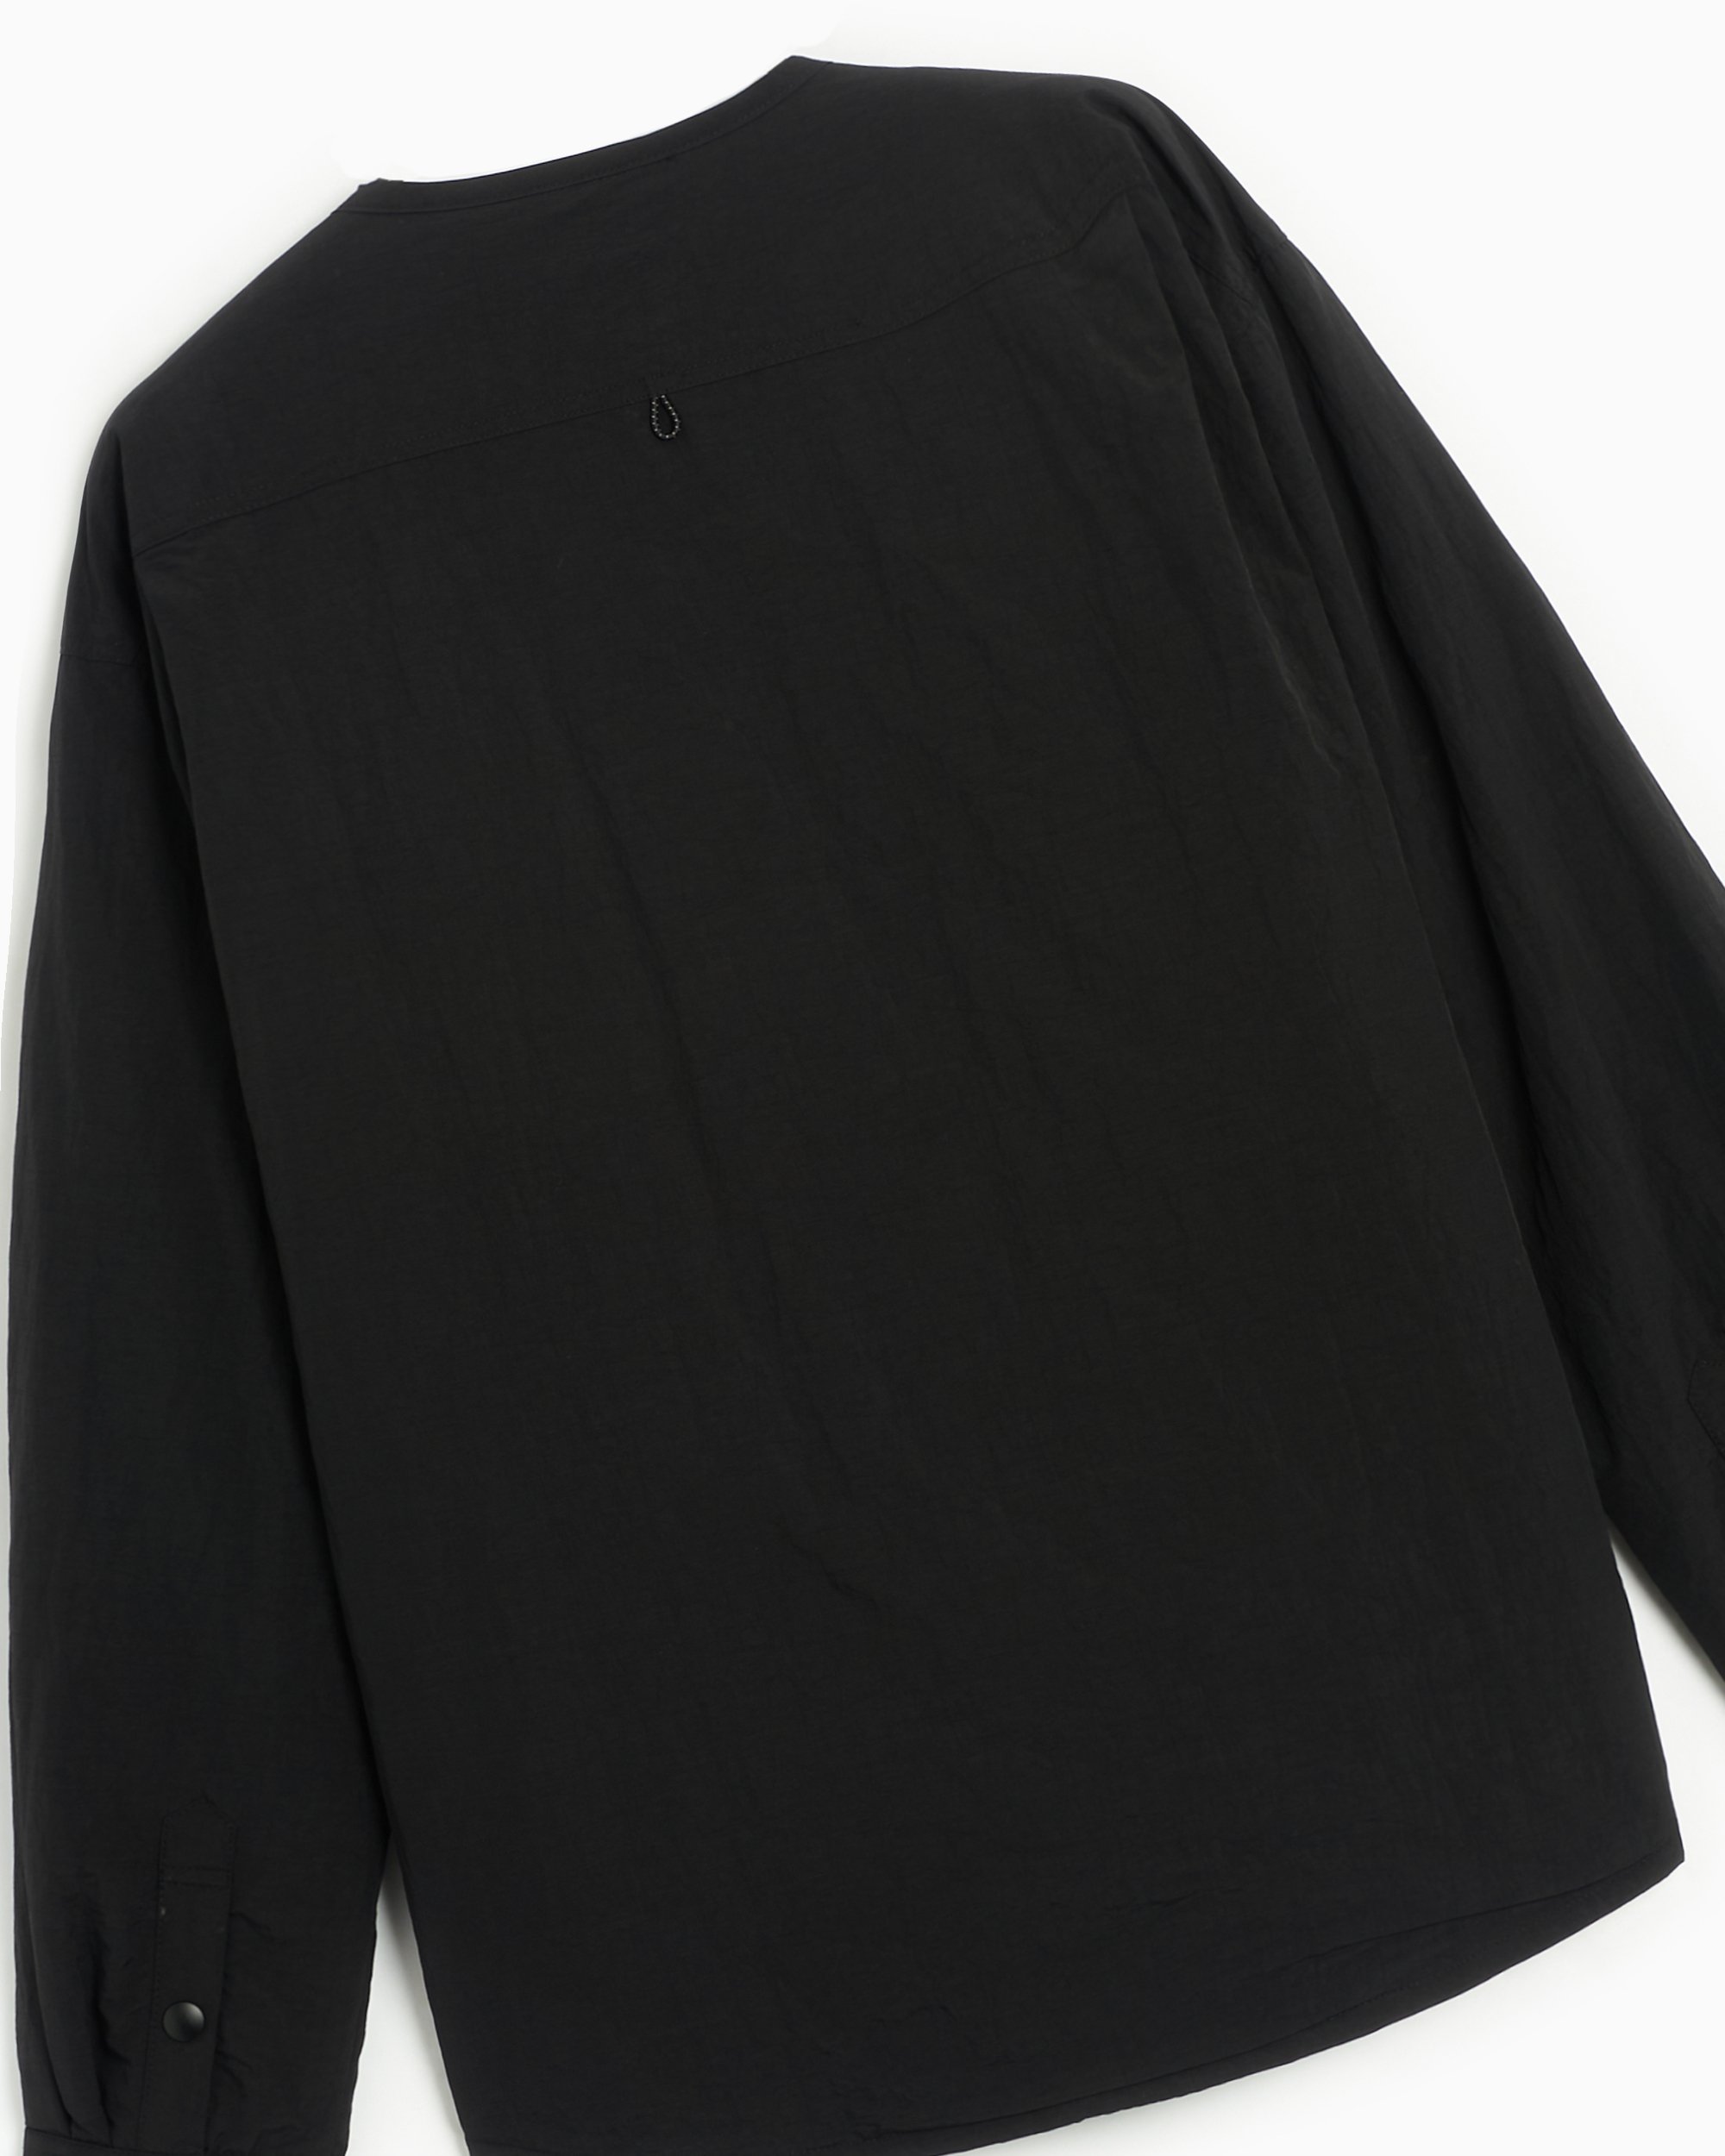 Liberaiders® LR Men's Utility Jacket Black 750072303-BLACK| Buy